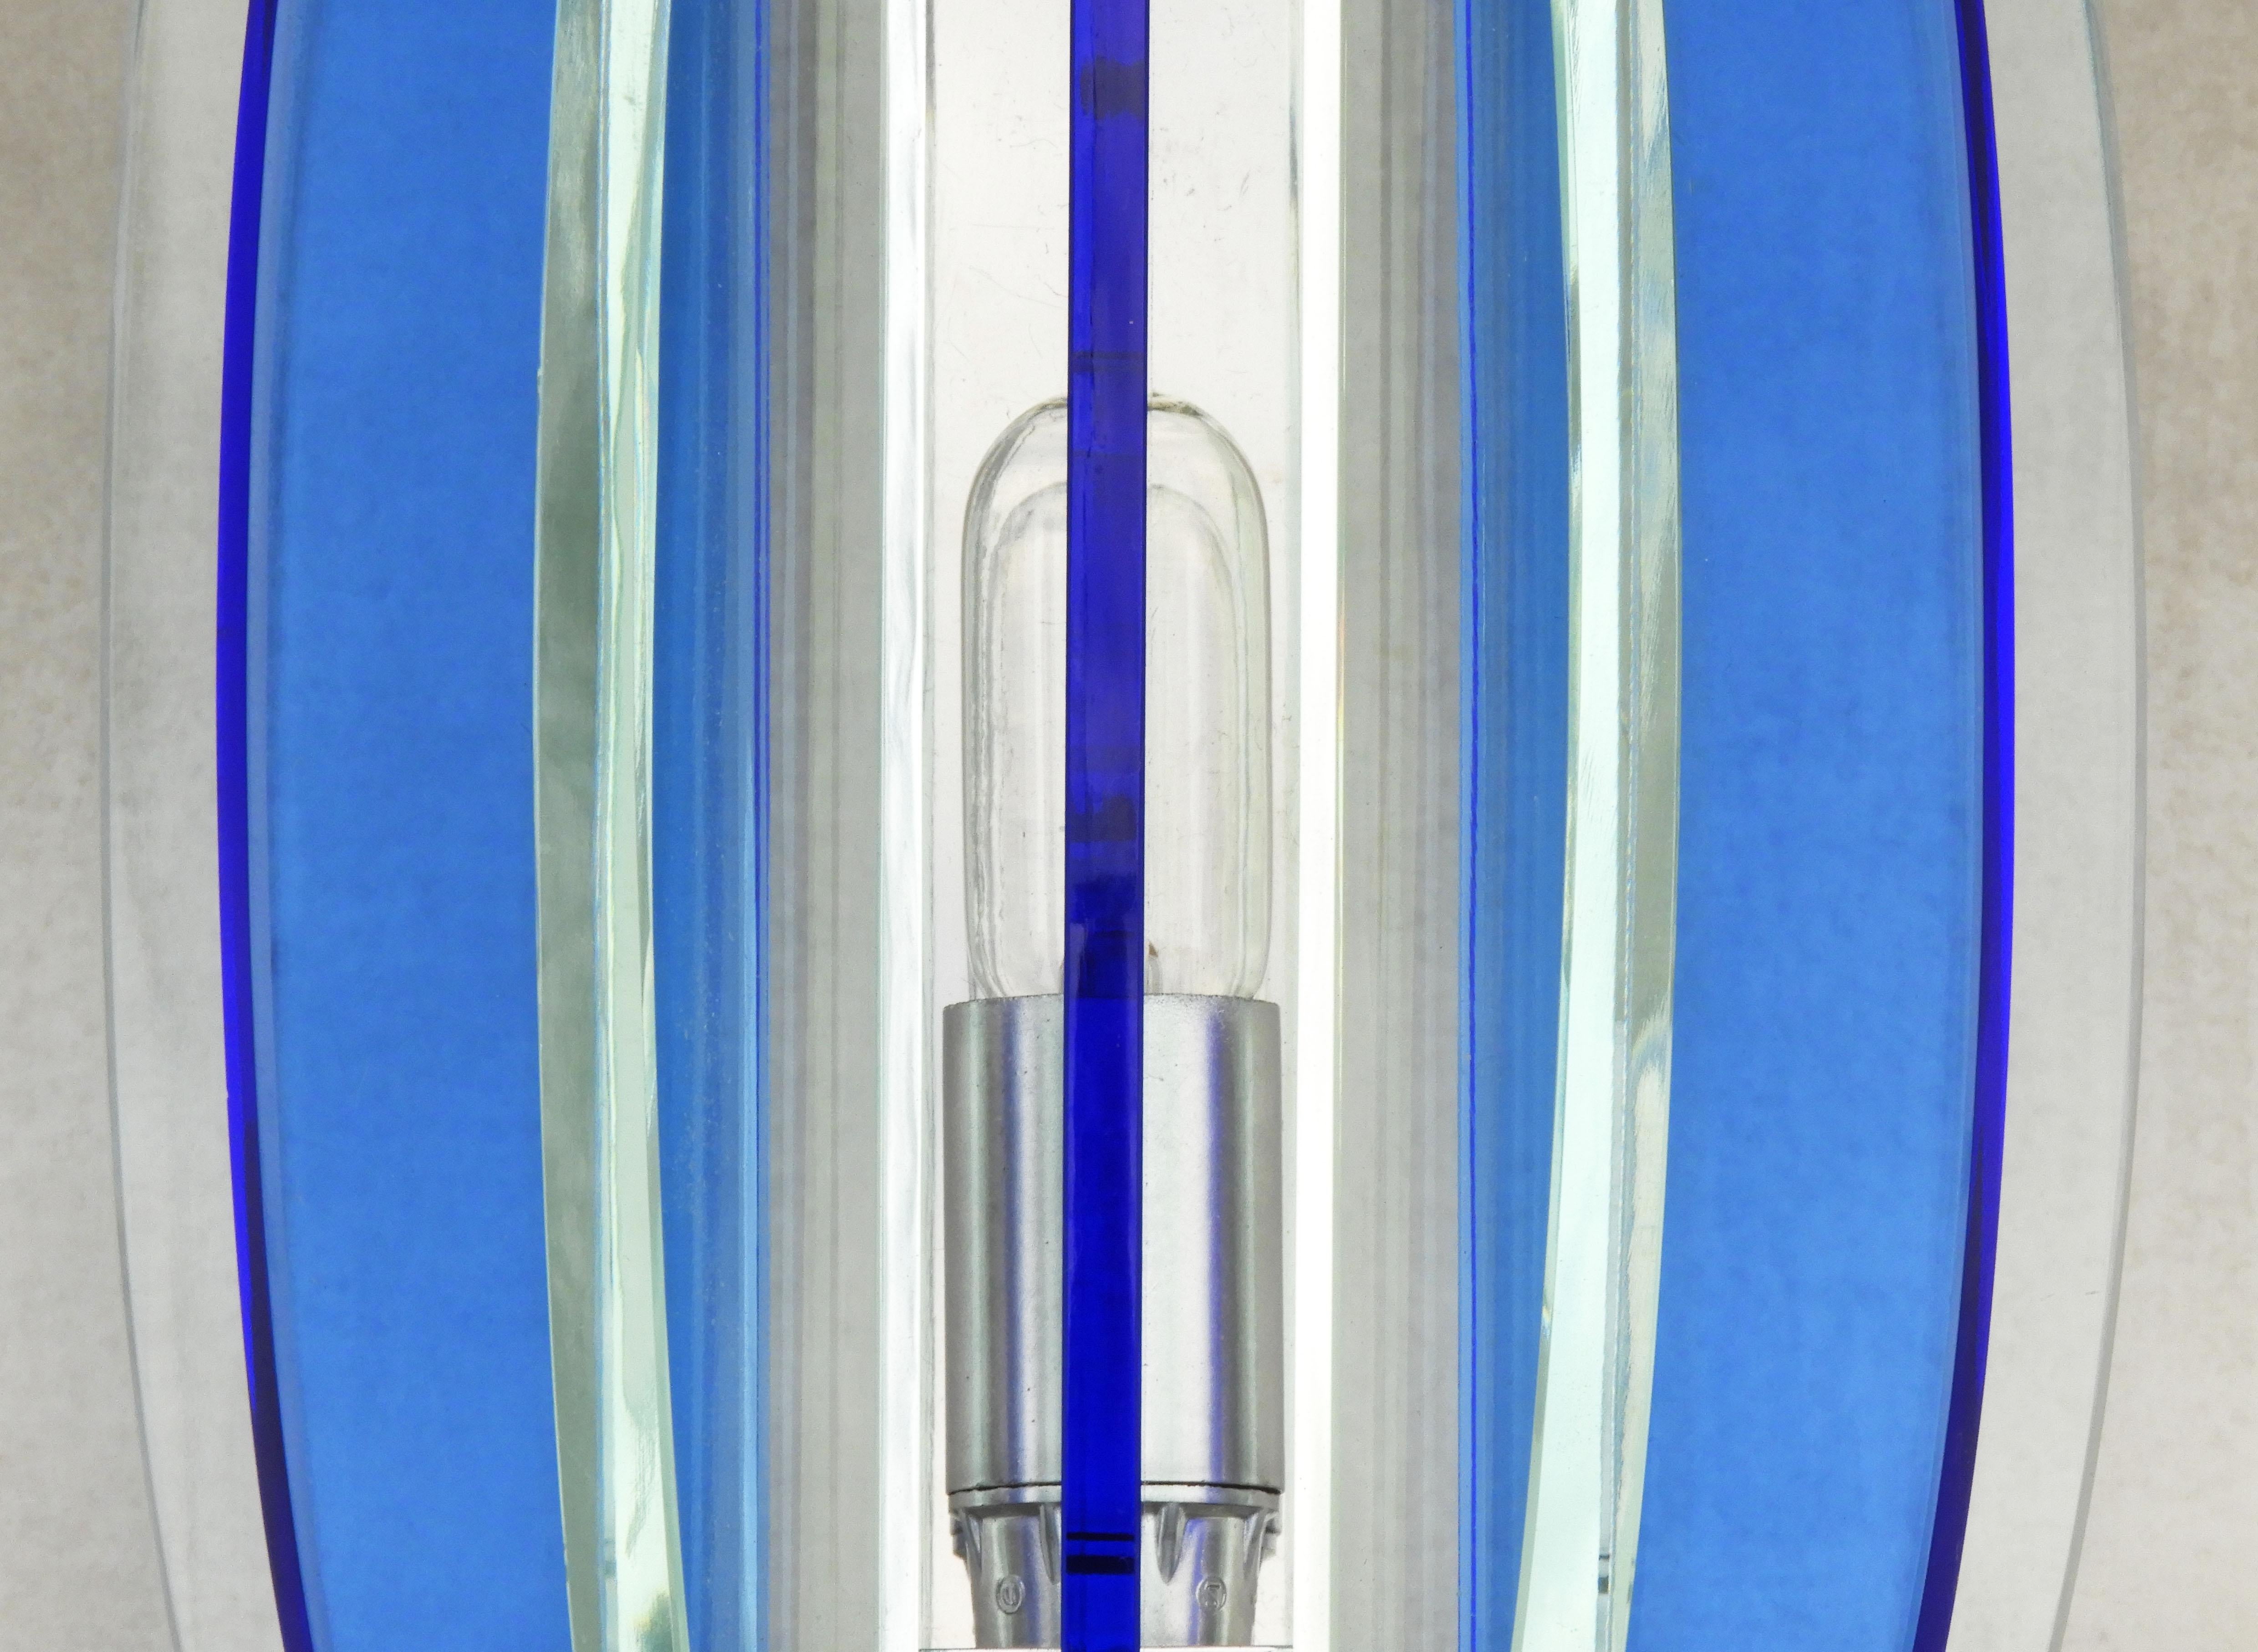 20th Century Pair of Italian Glass Wall Light Sconces by VECA Italy, C1970